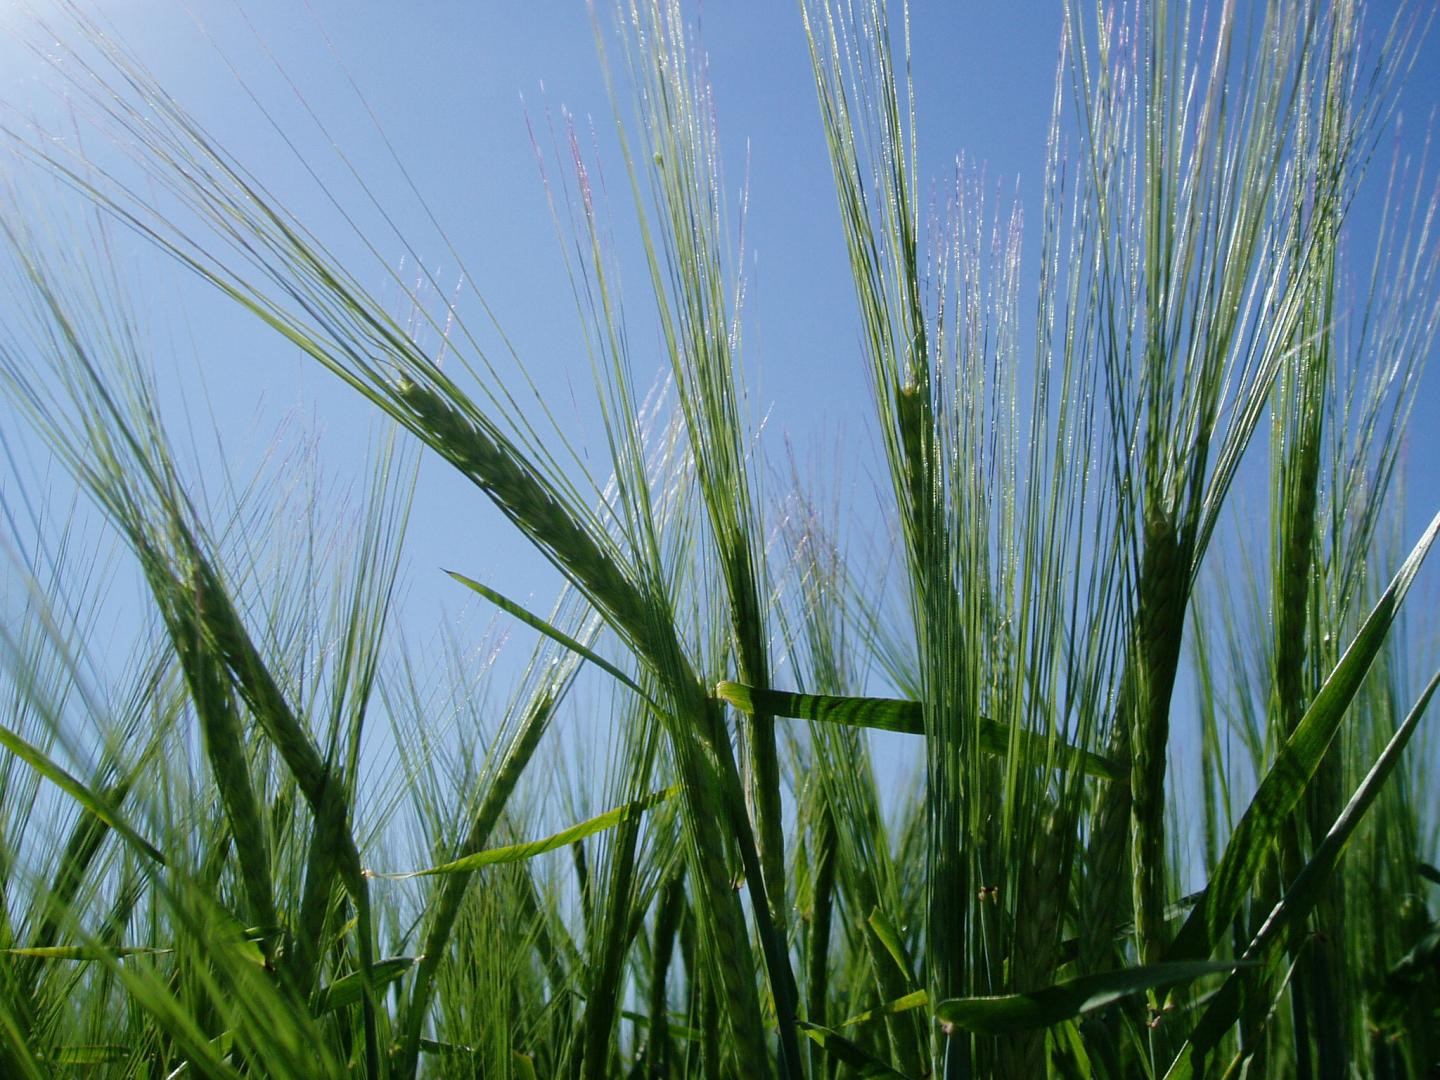 Barley mutant in the field